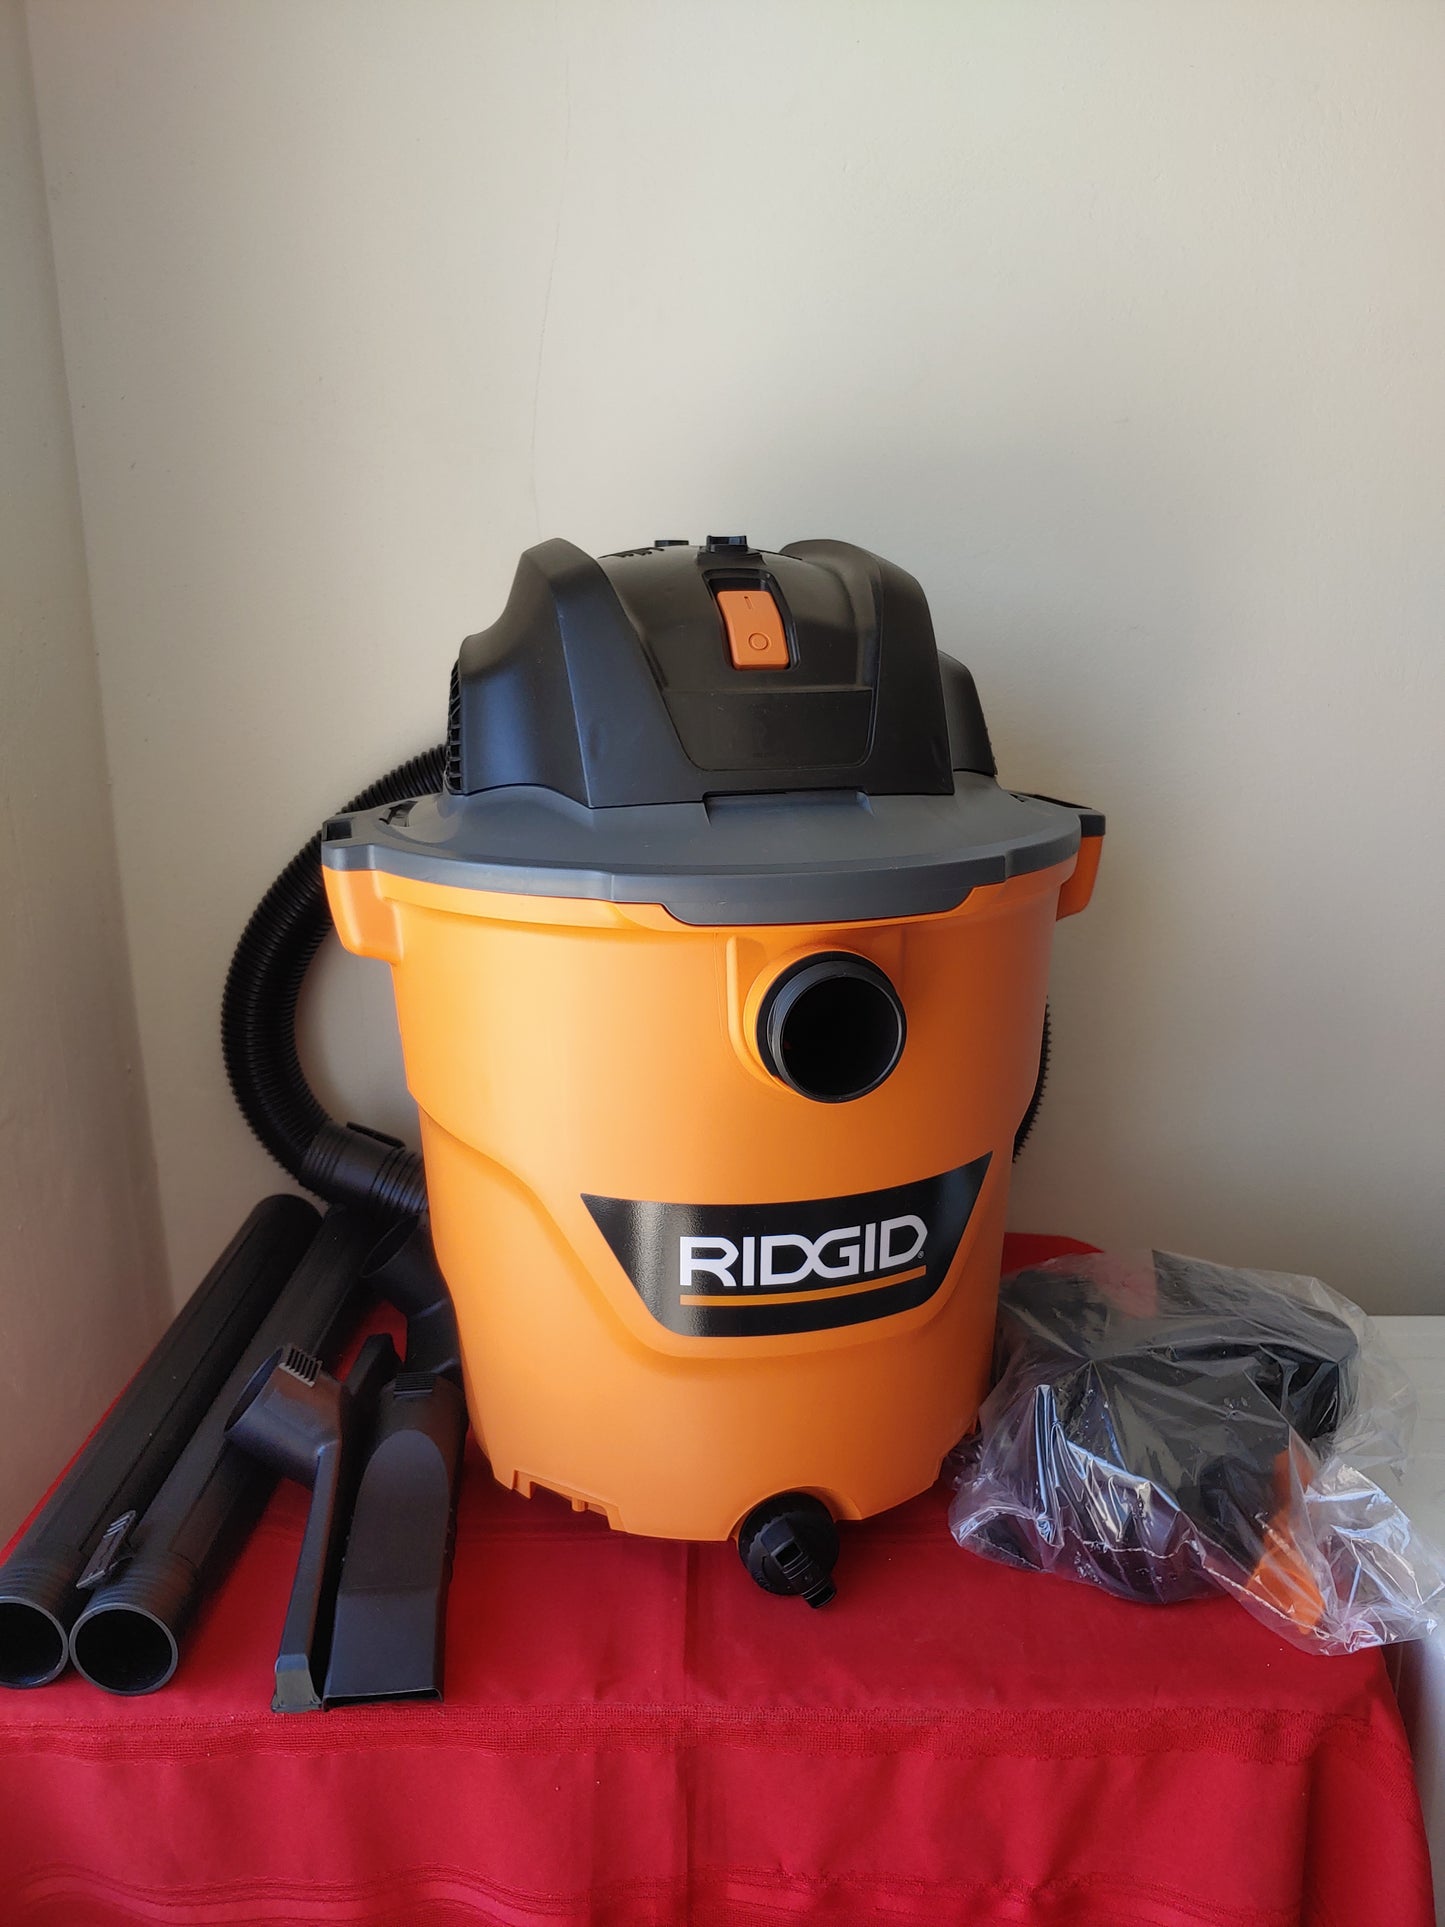 Aspiradora para seco/mojado 5 HP de 45 litros - Ridgid (Nuevo, caja abierta)